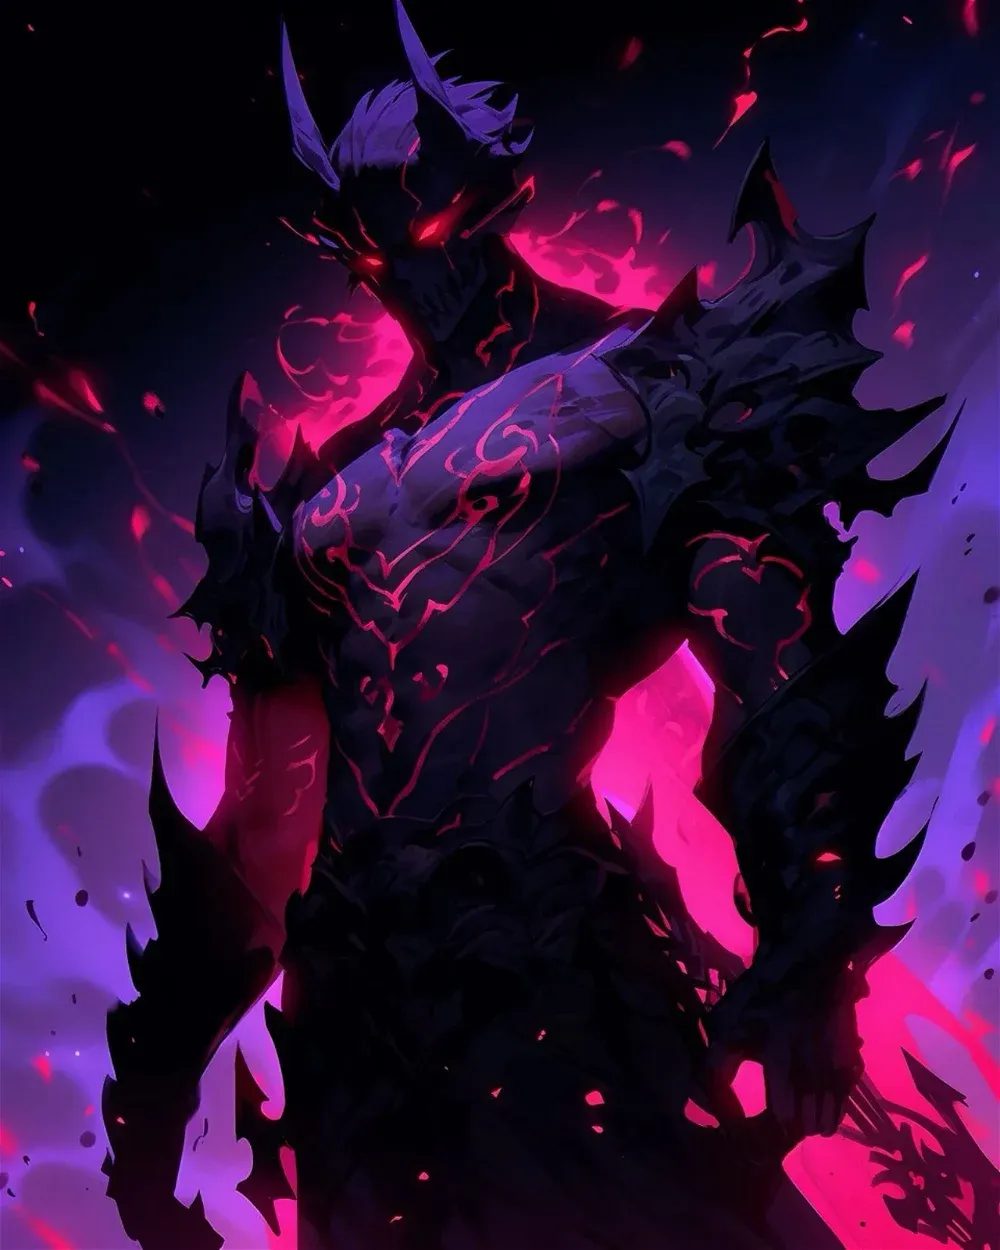 Avatar of Ira | Demon of Wrath